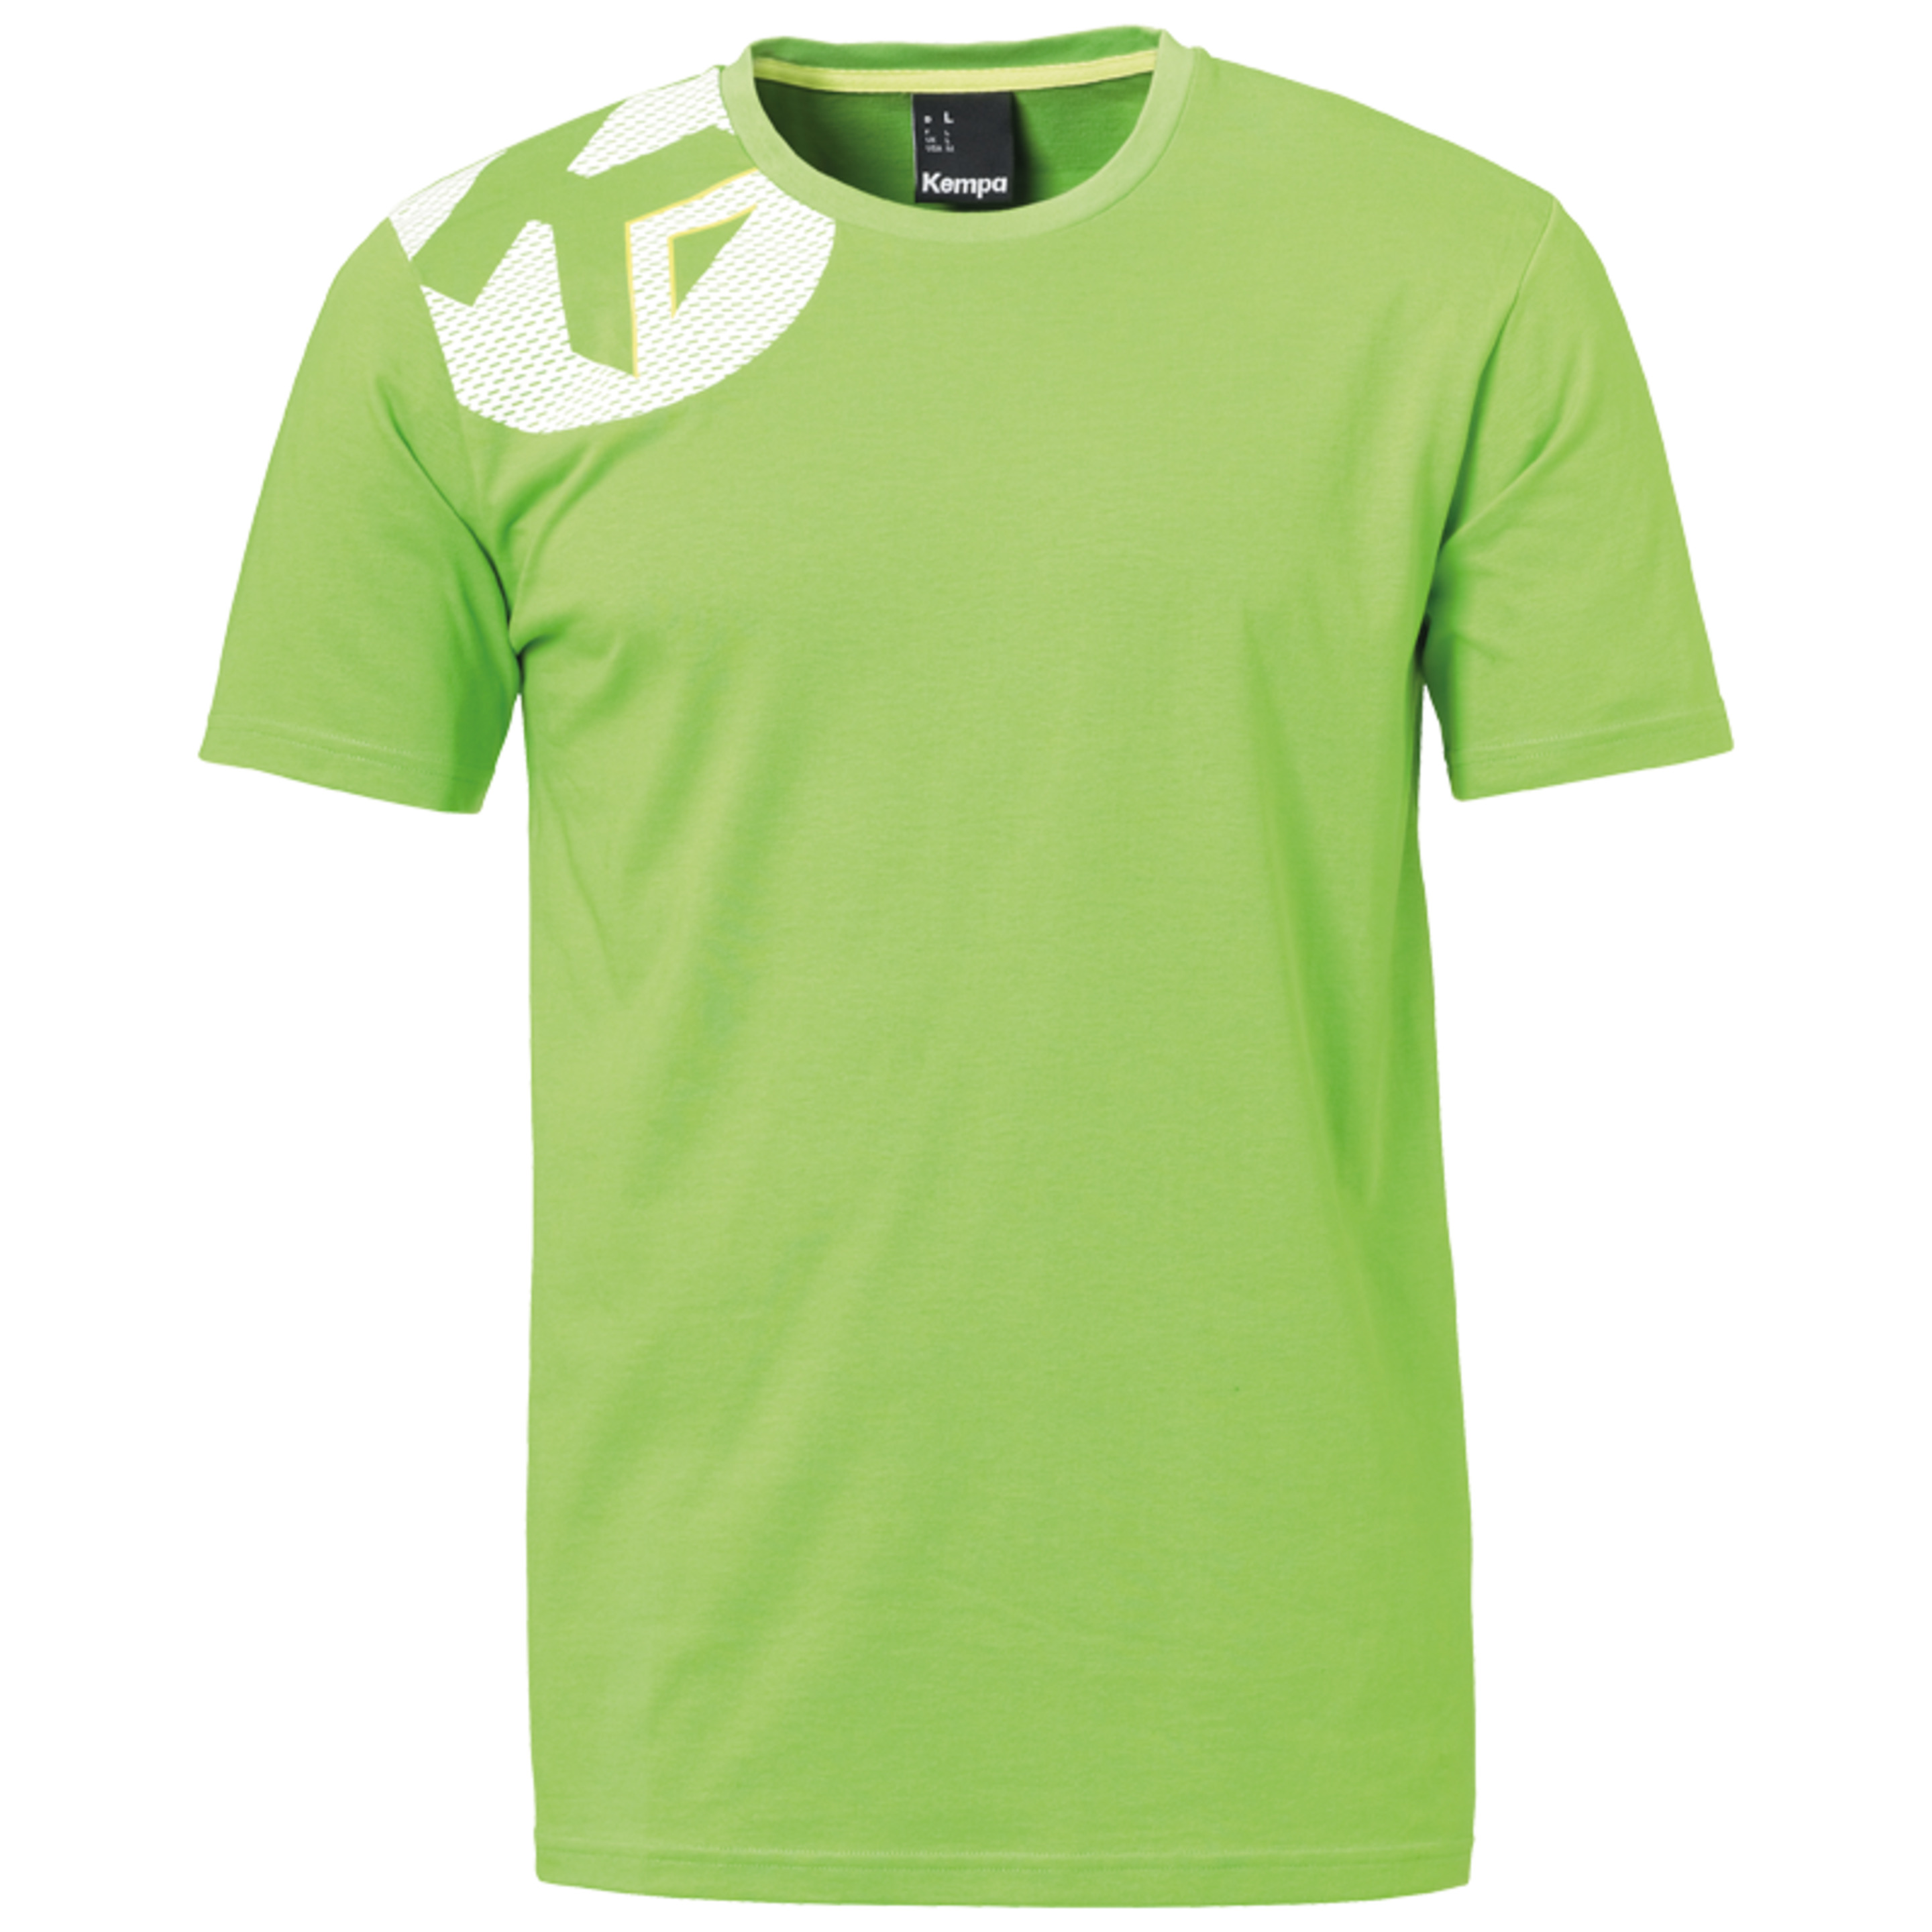 Camiseta Core 2.0 Kempa - verde - 